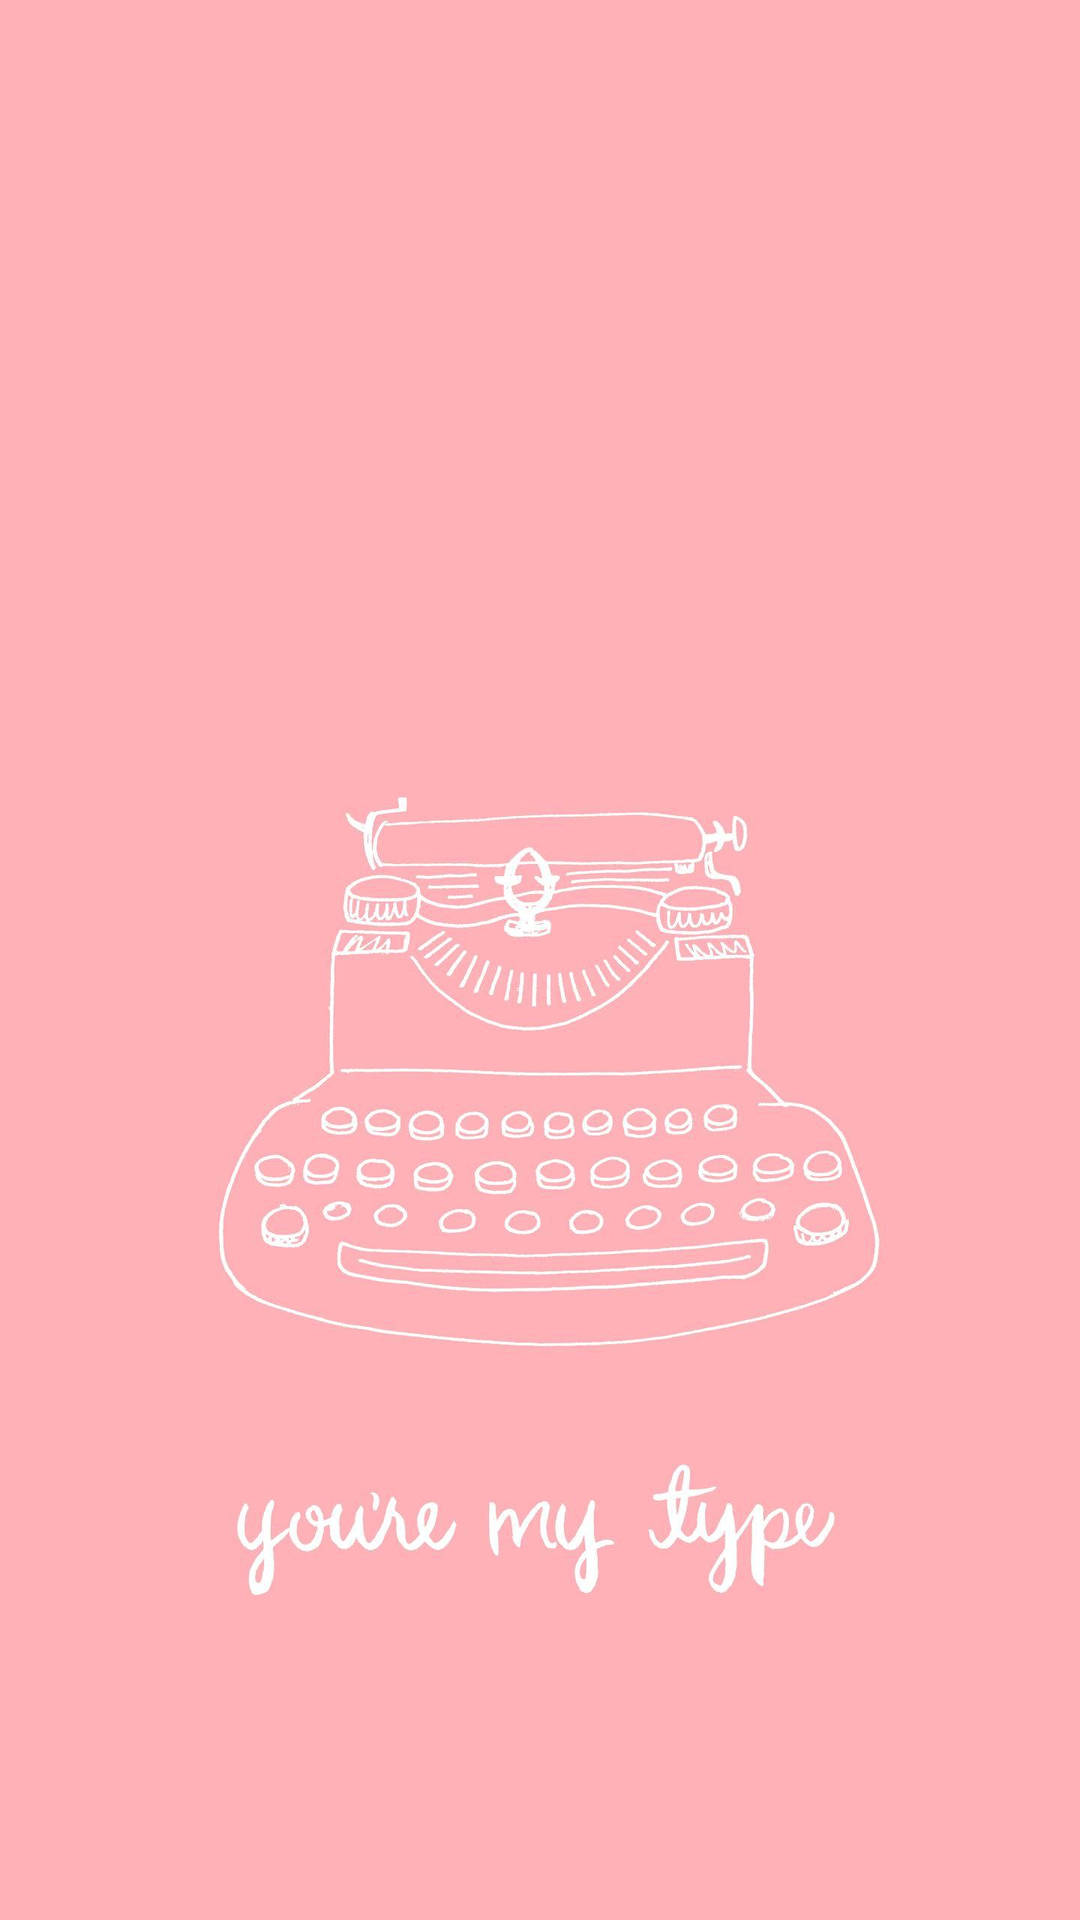 Aesthetic Pink Iphone Typewriter You're My Type Wallpaper